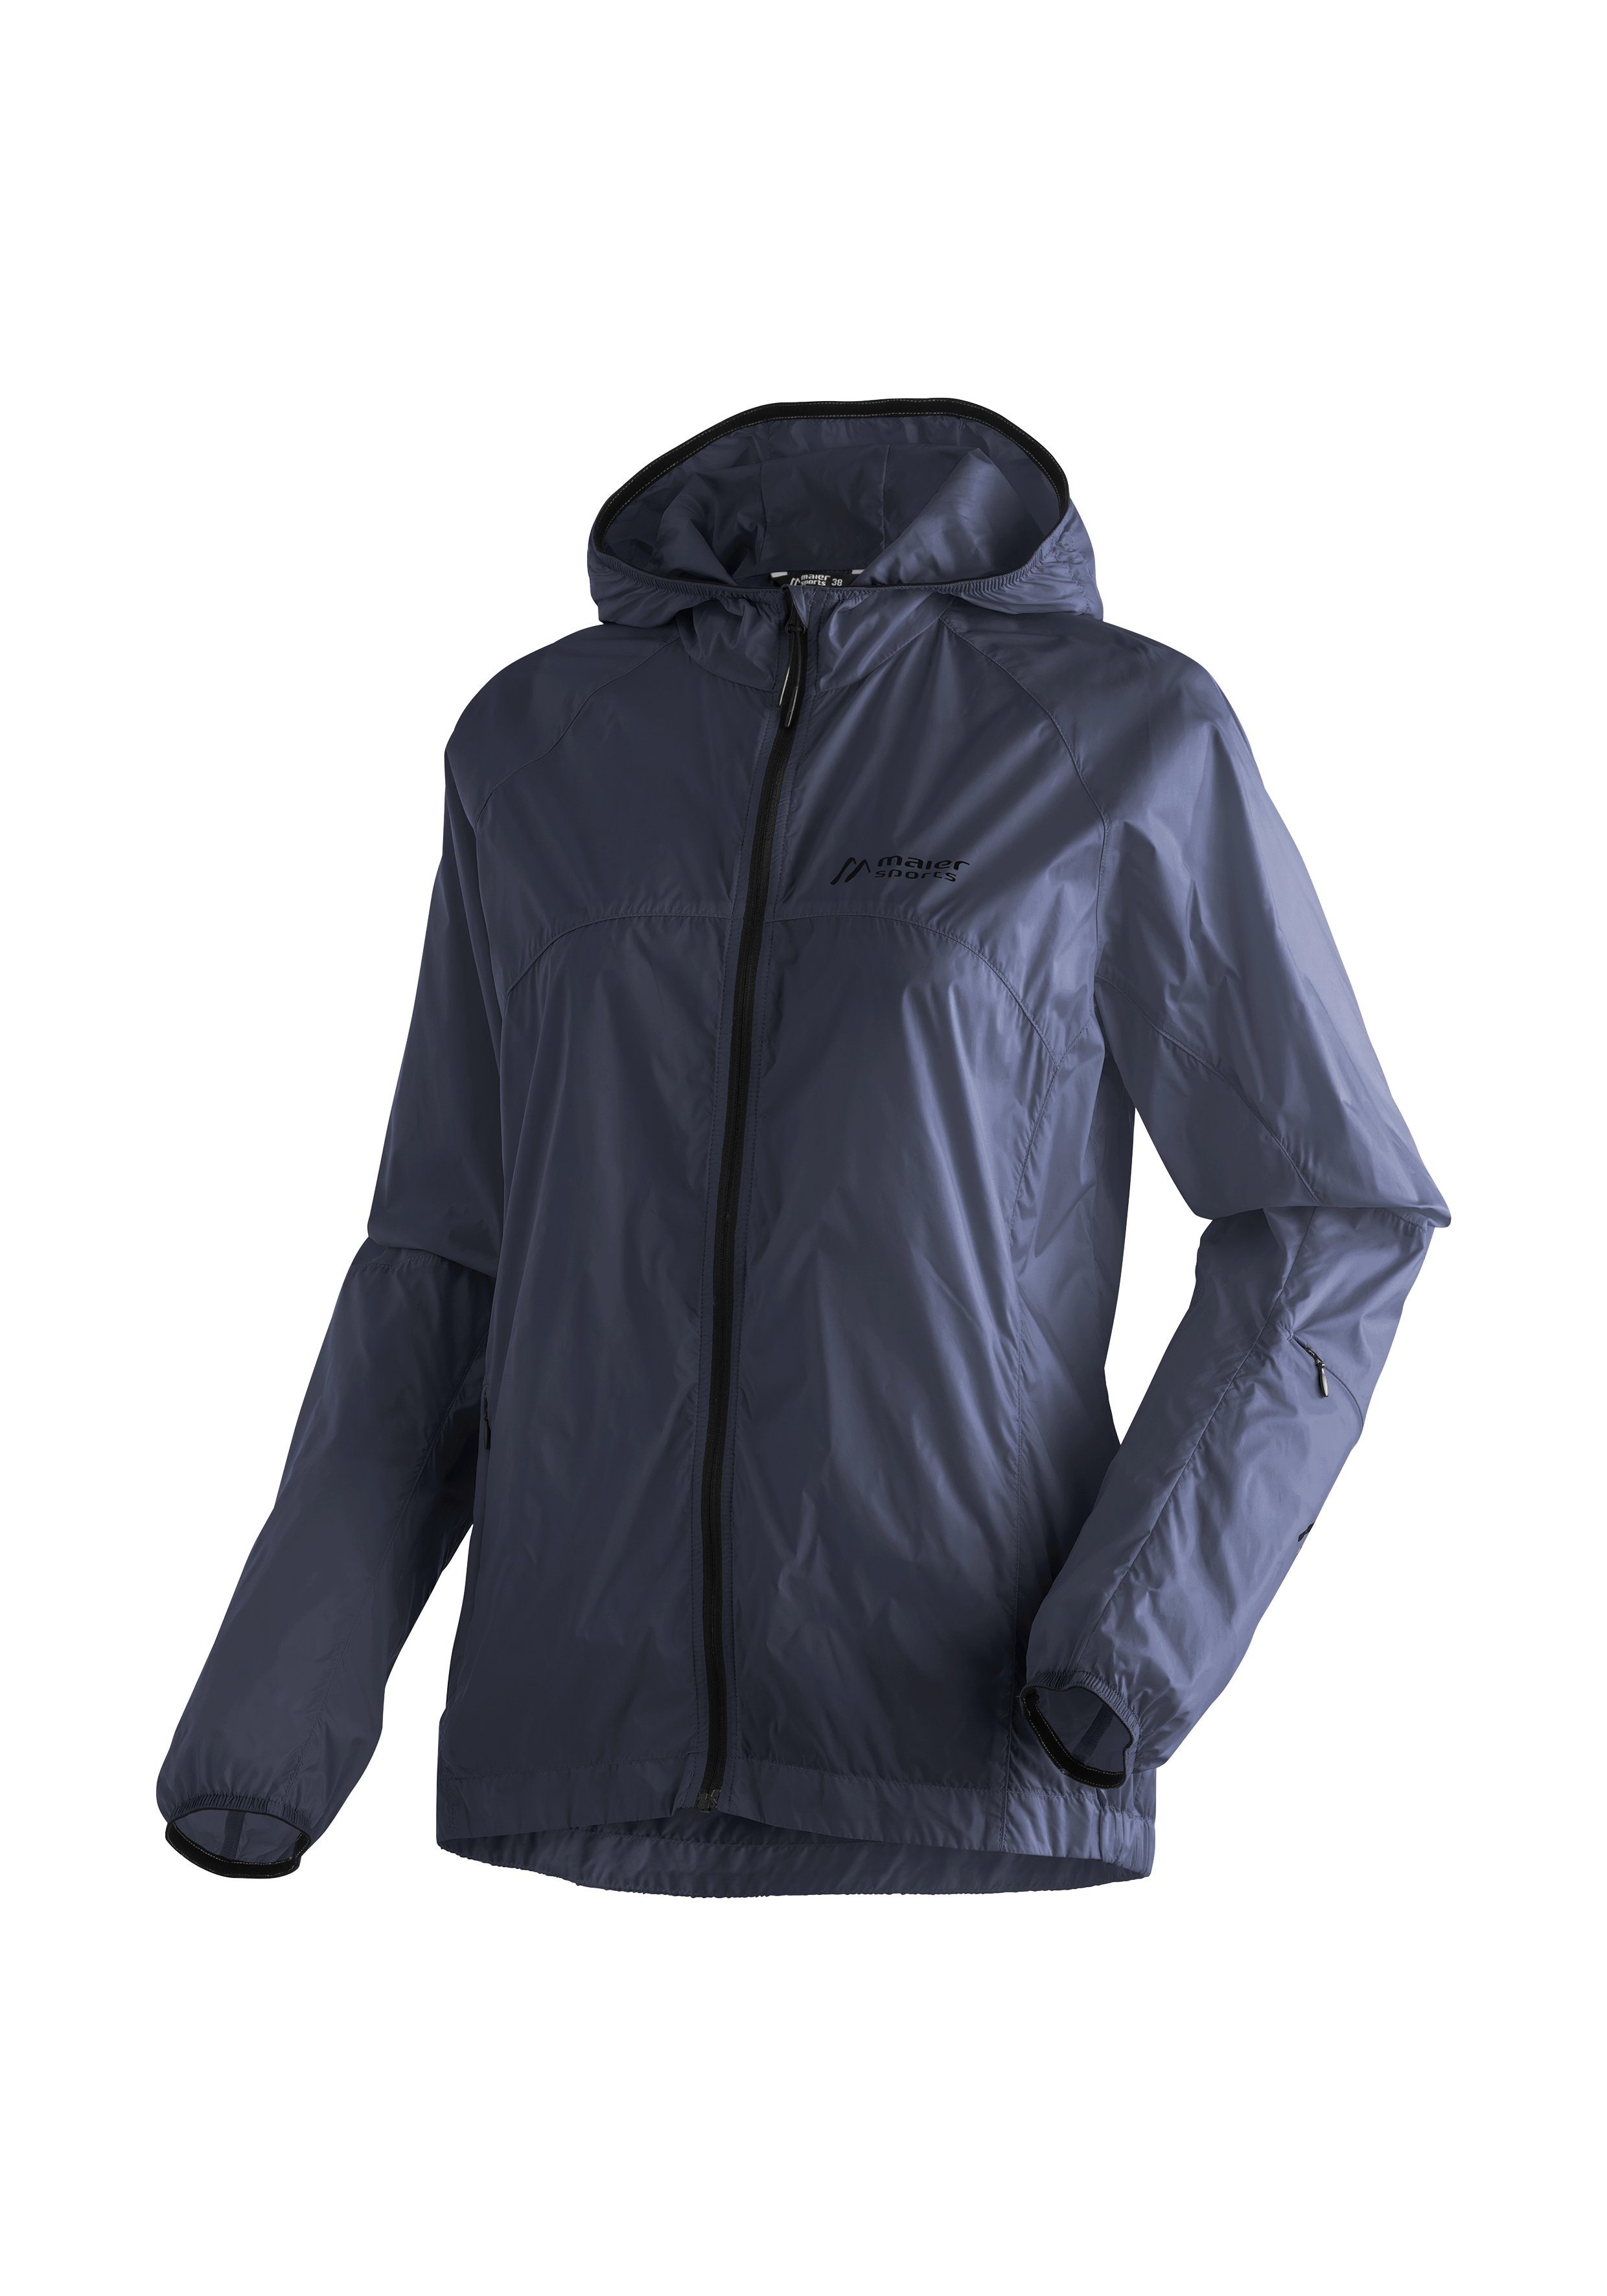 Maier Sports Funktionsjacke Feathery W Leichte Windjacke mit besonders kleinem Packmaß dunkelblau | Übergangsjacken